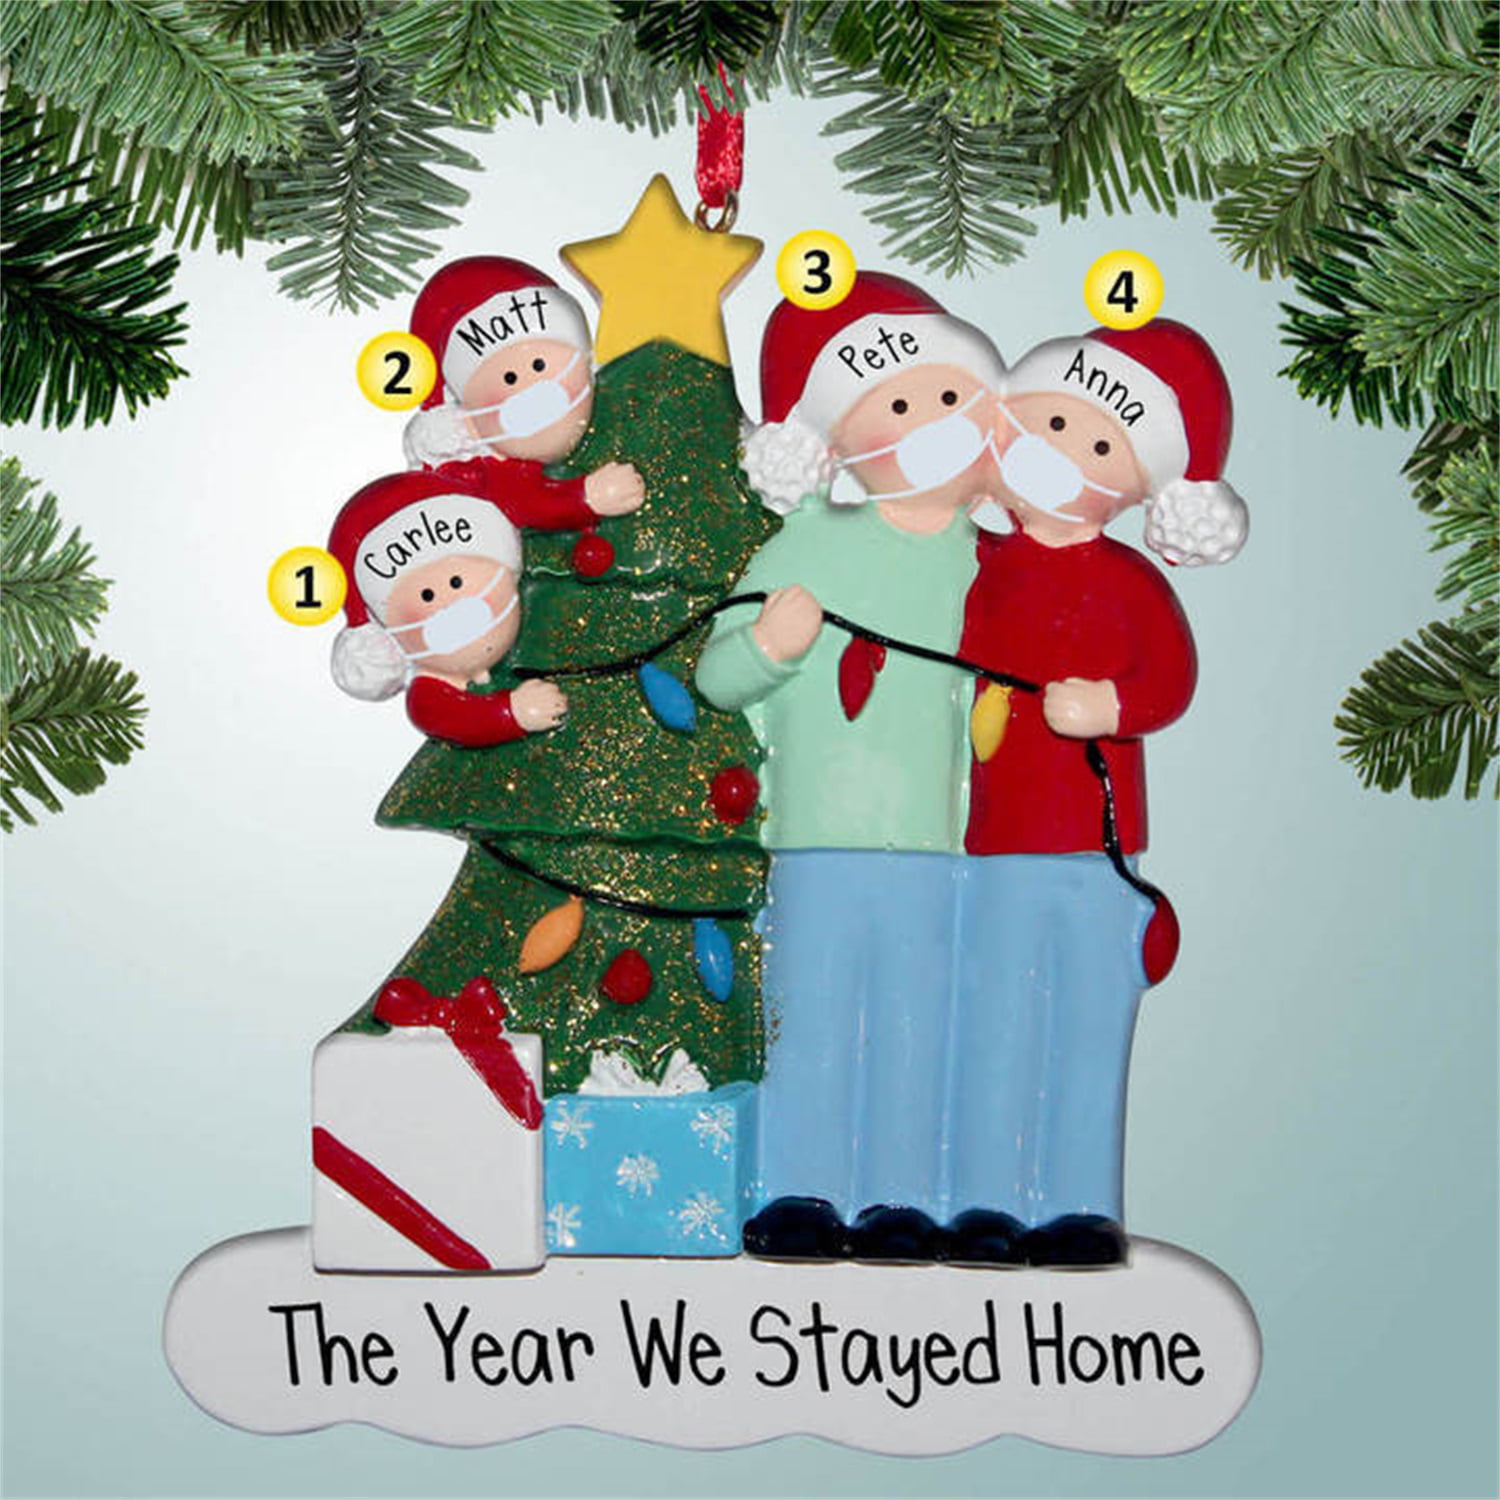 TELAOTE Christmas Decorations Personalized 6 Family Members Name Christmas Ornament Kit 2020 DIY Survivor Family Customized Christmas Tree Pendant Creative Gift